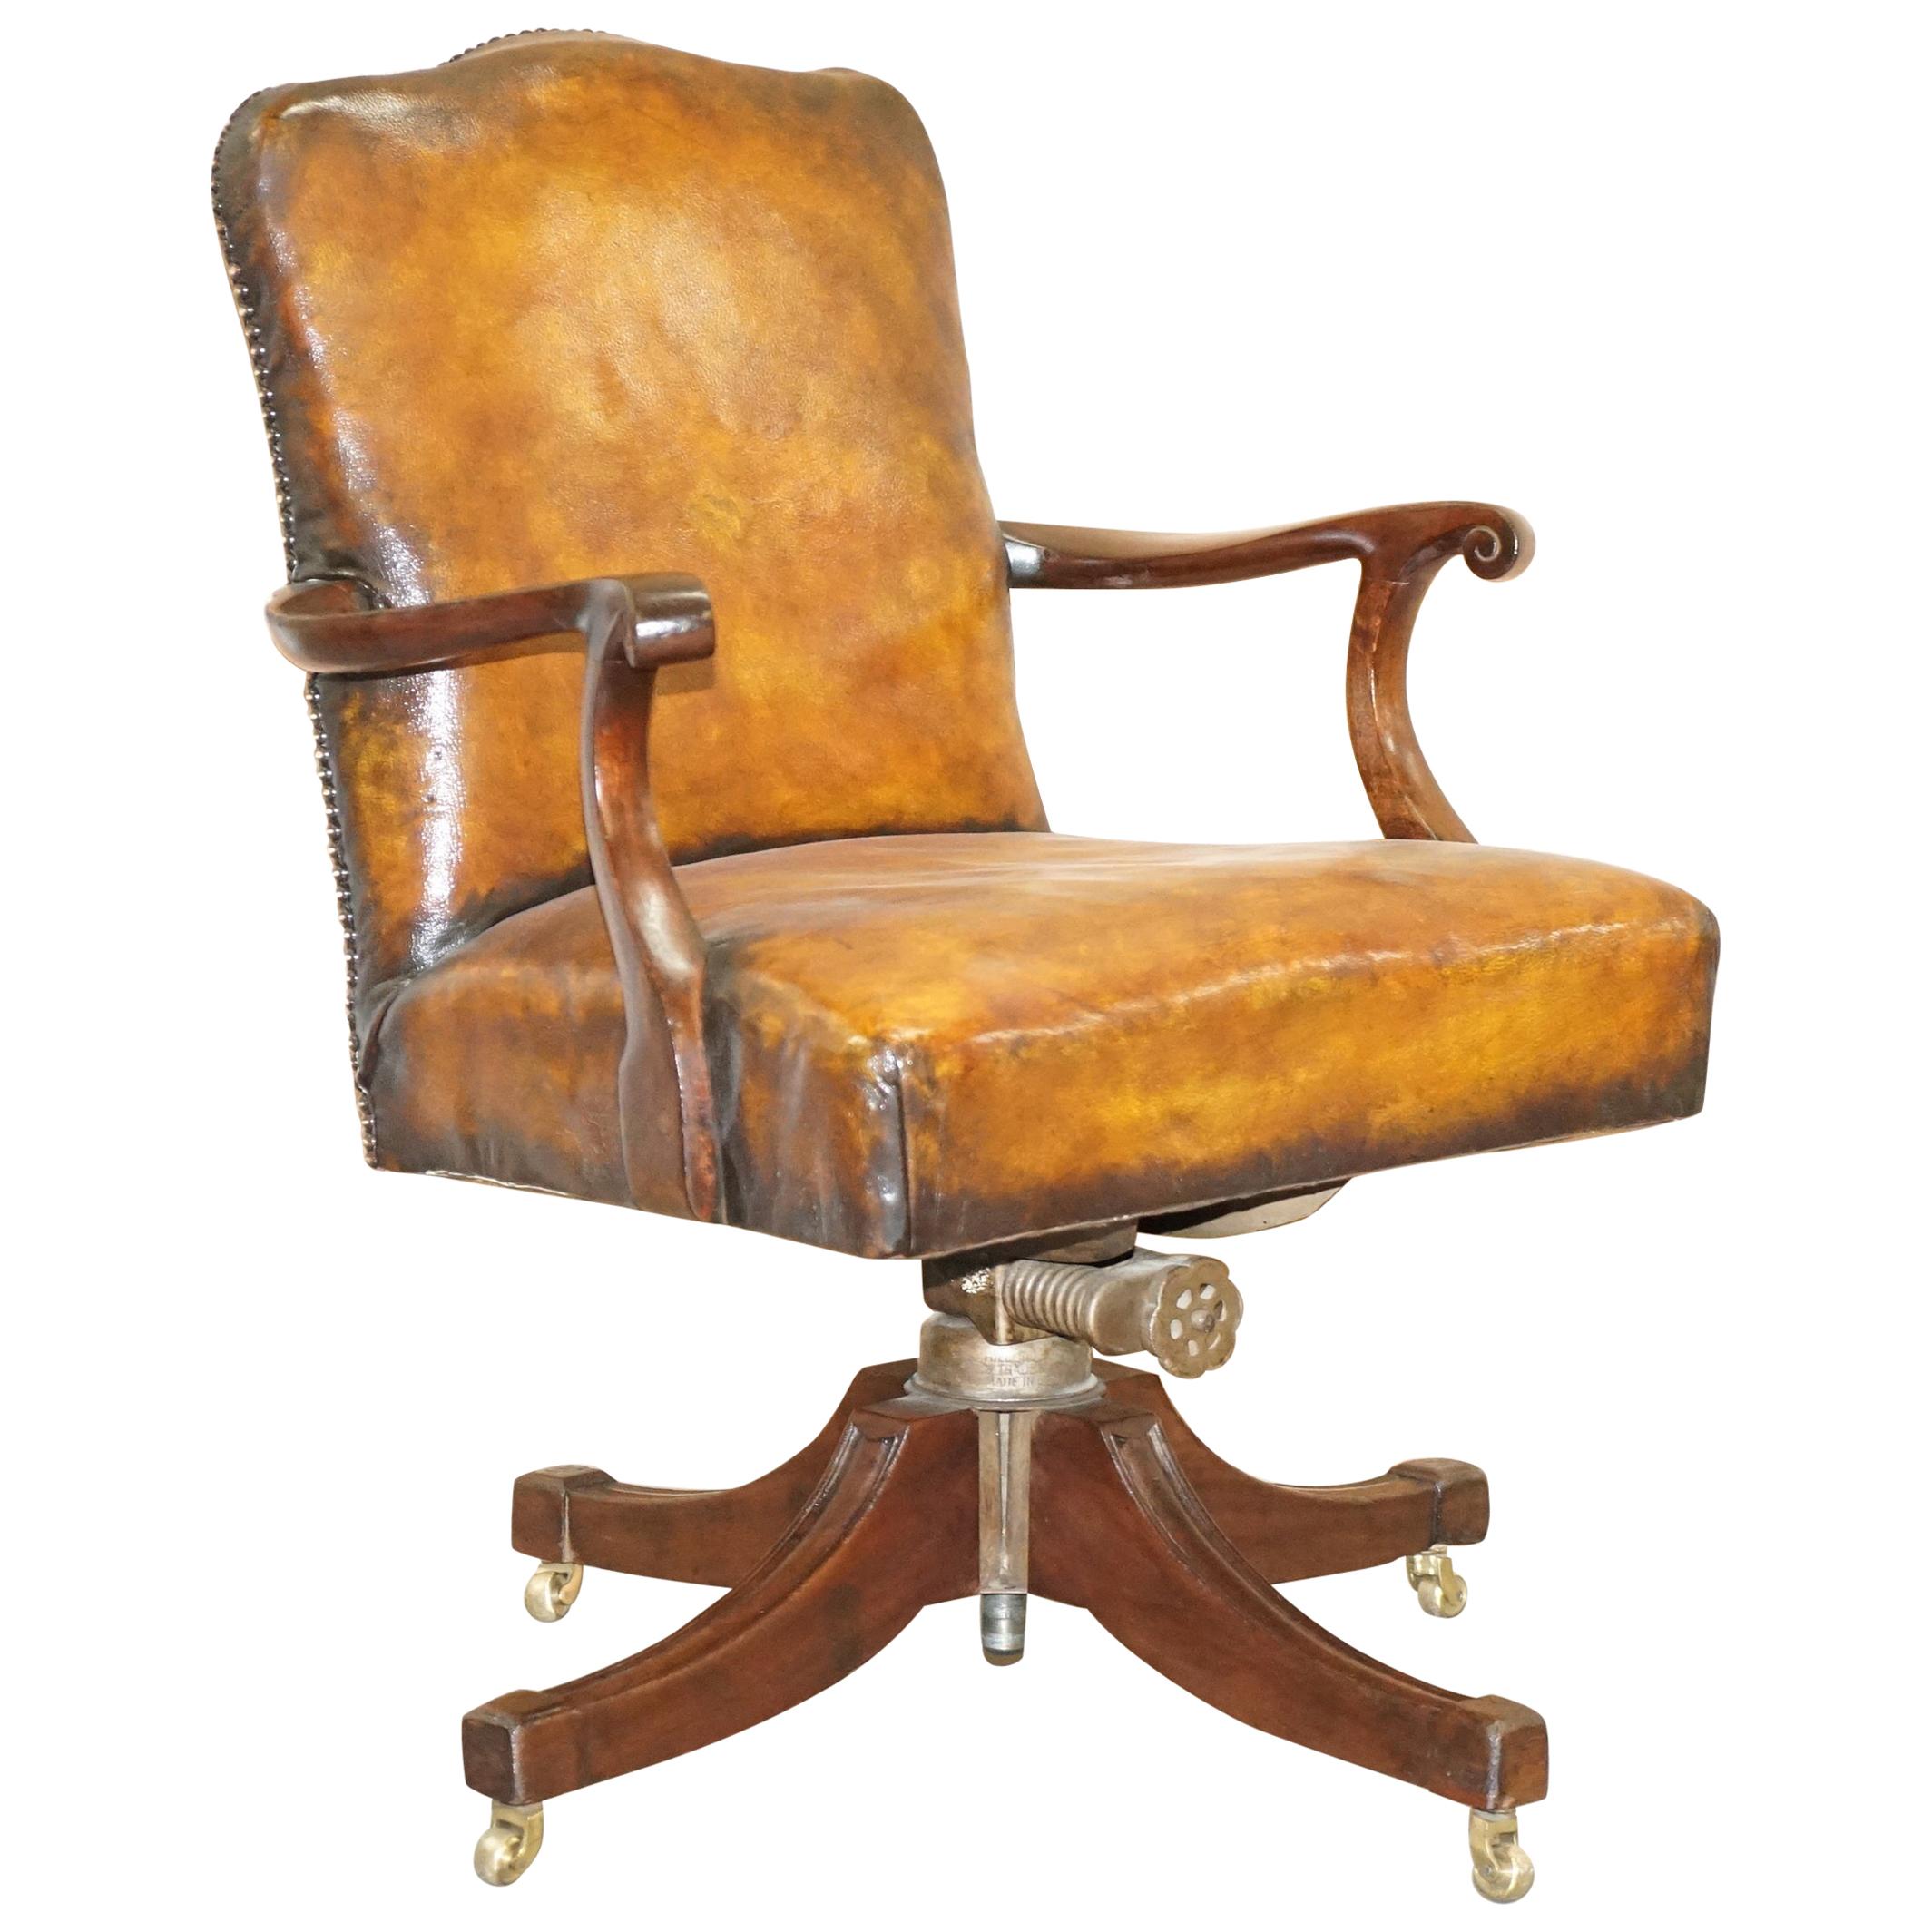 Original circa 1880 Maple & Co Restored Captains Chair Period Hillcrest Base